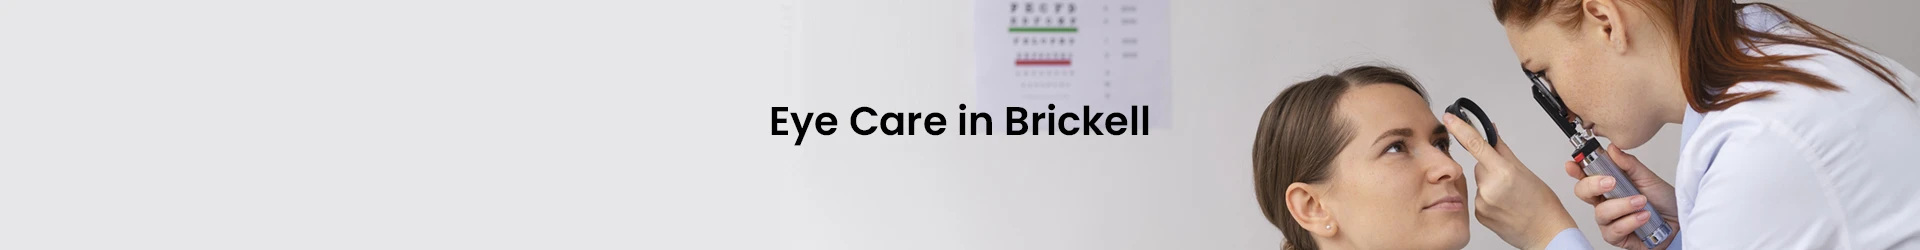 Eyes on Brickell: Miami, Brickell Eye Care Services